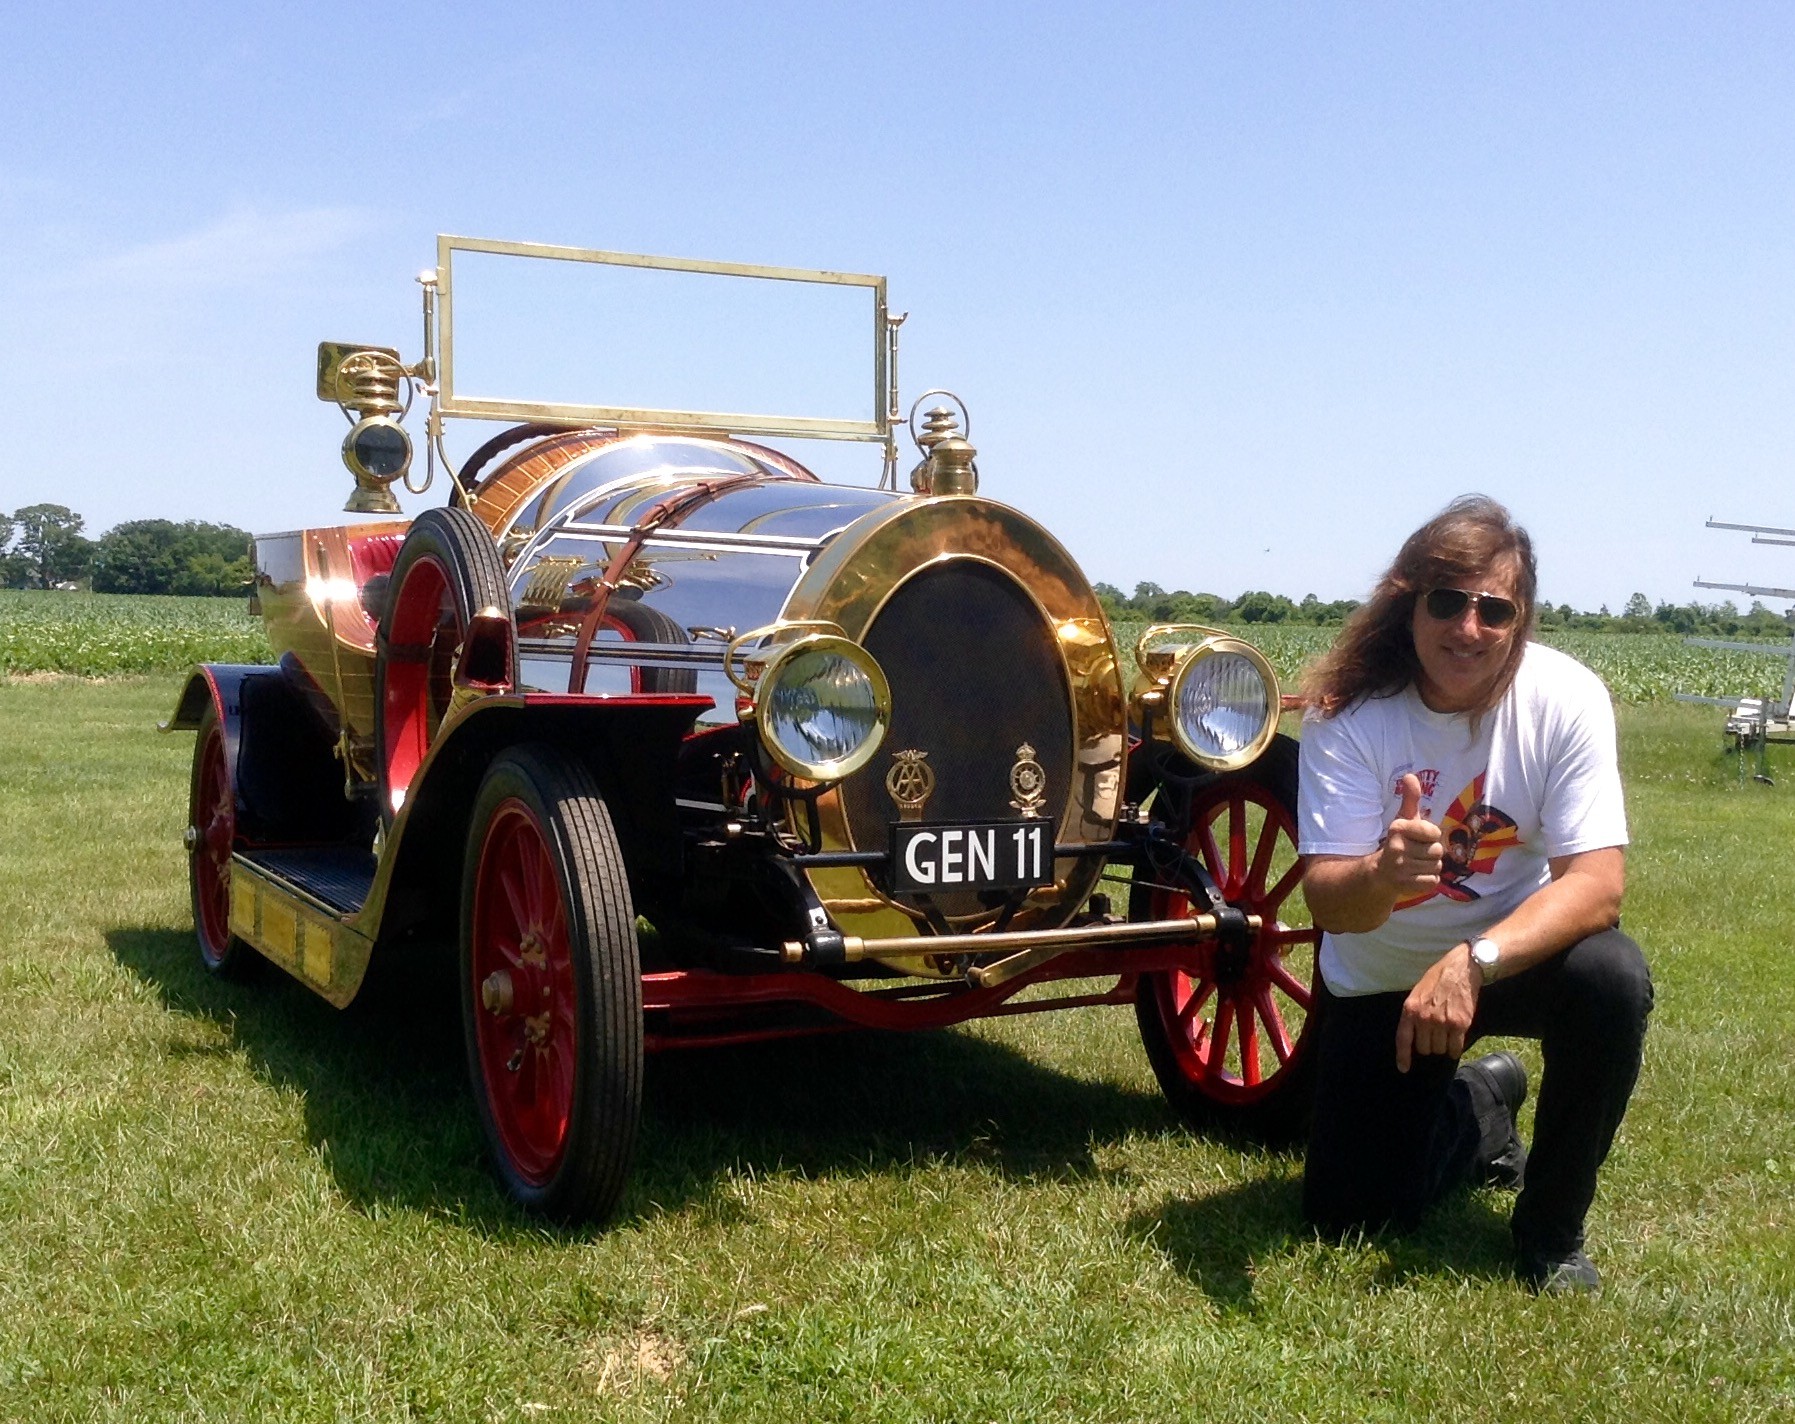 Tony Garofalo with his Chitty Chitty Bang Bang car that took him five years to build.